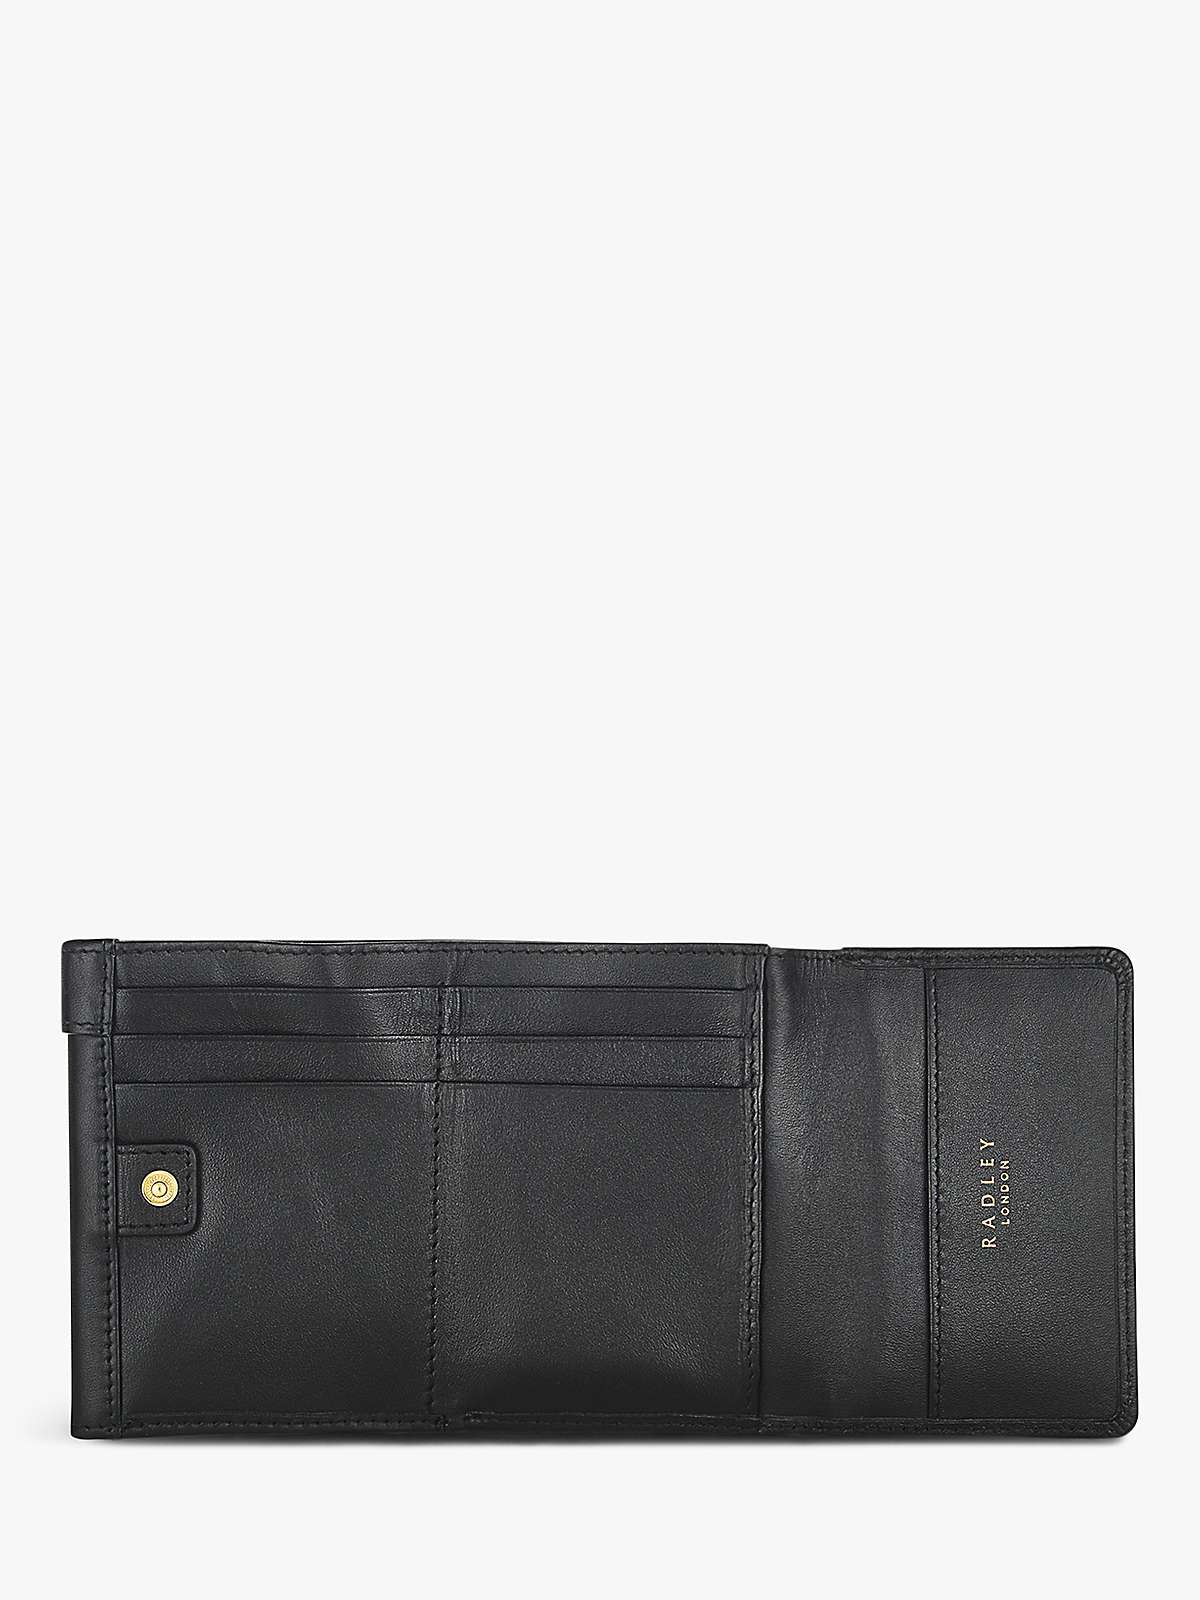 Buy Radley London Pockets Leather Tri-Fold Purse, Black Online at johnlewis.com